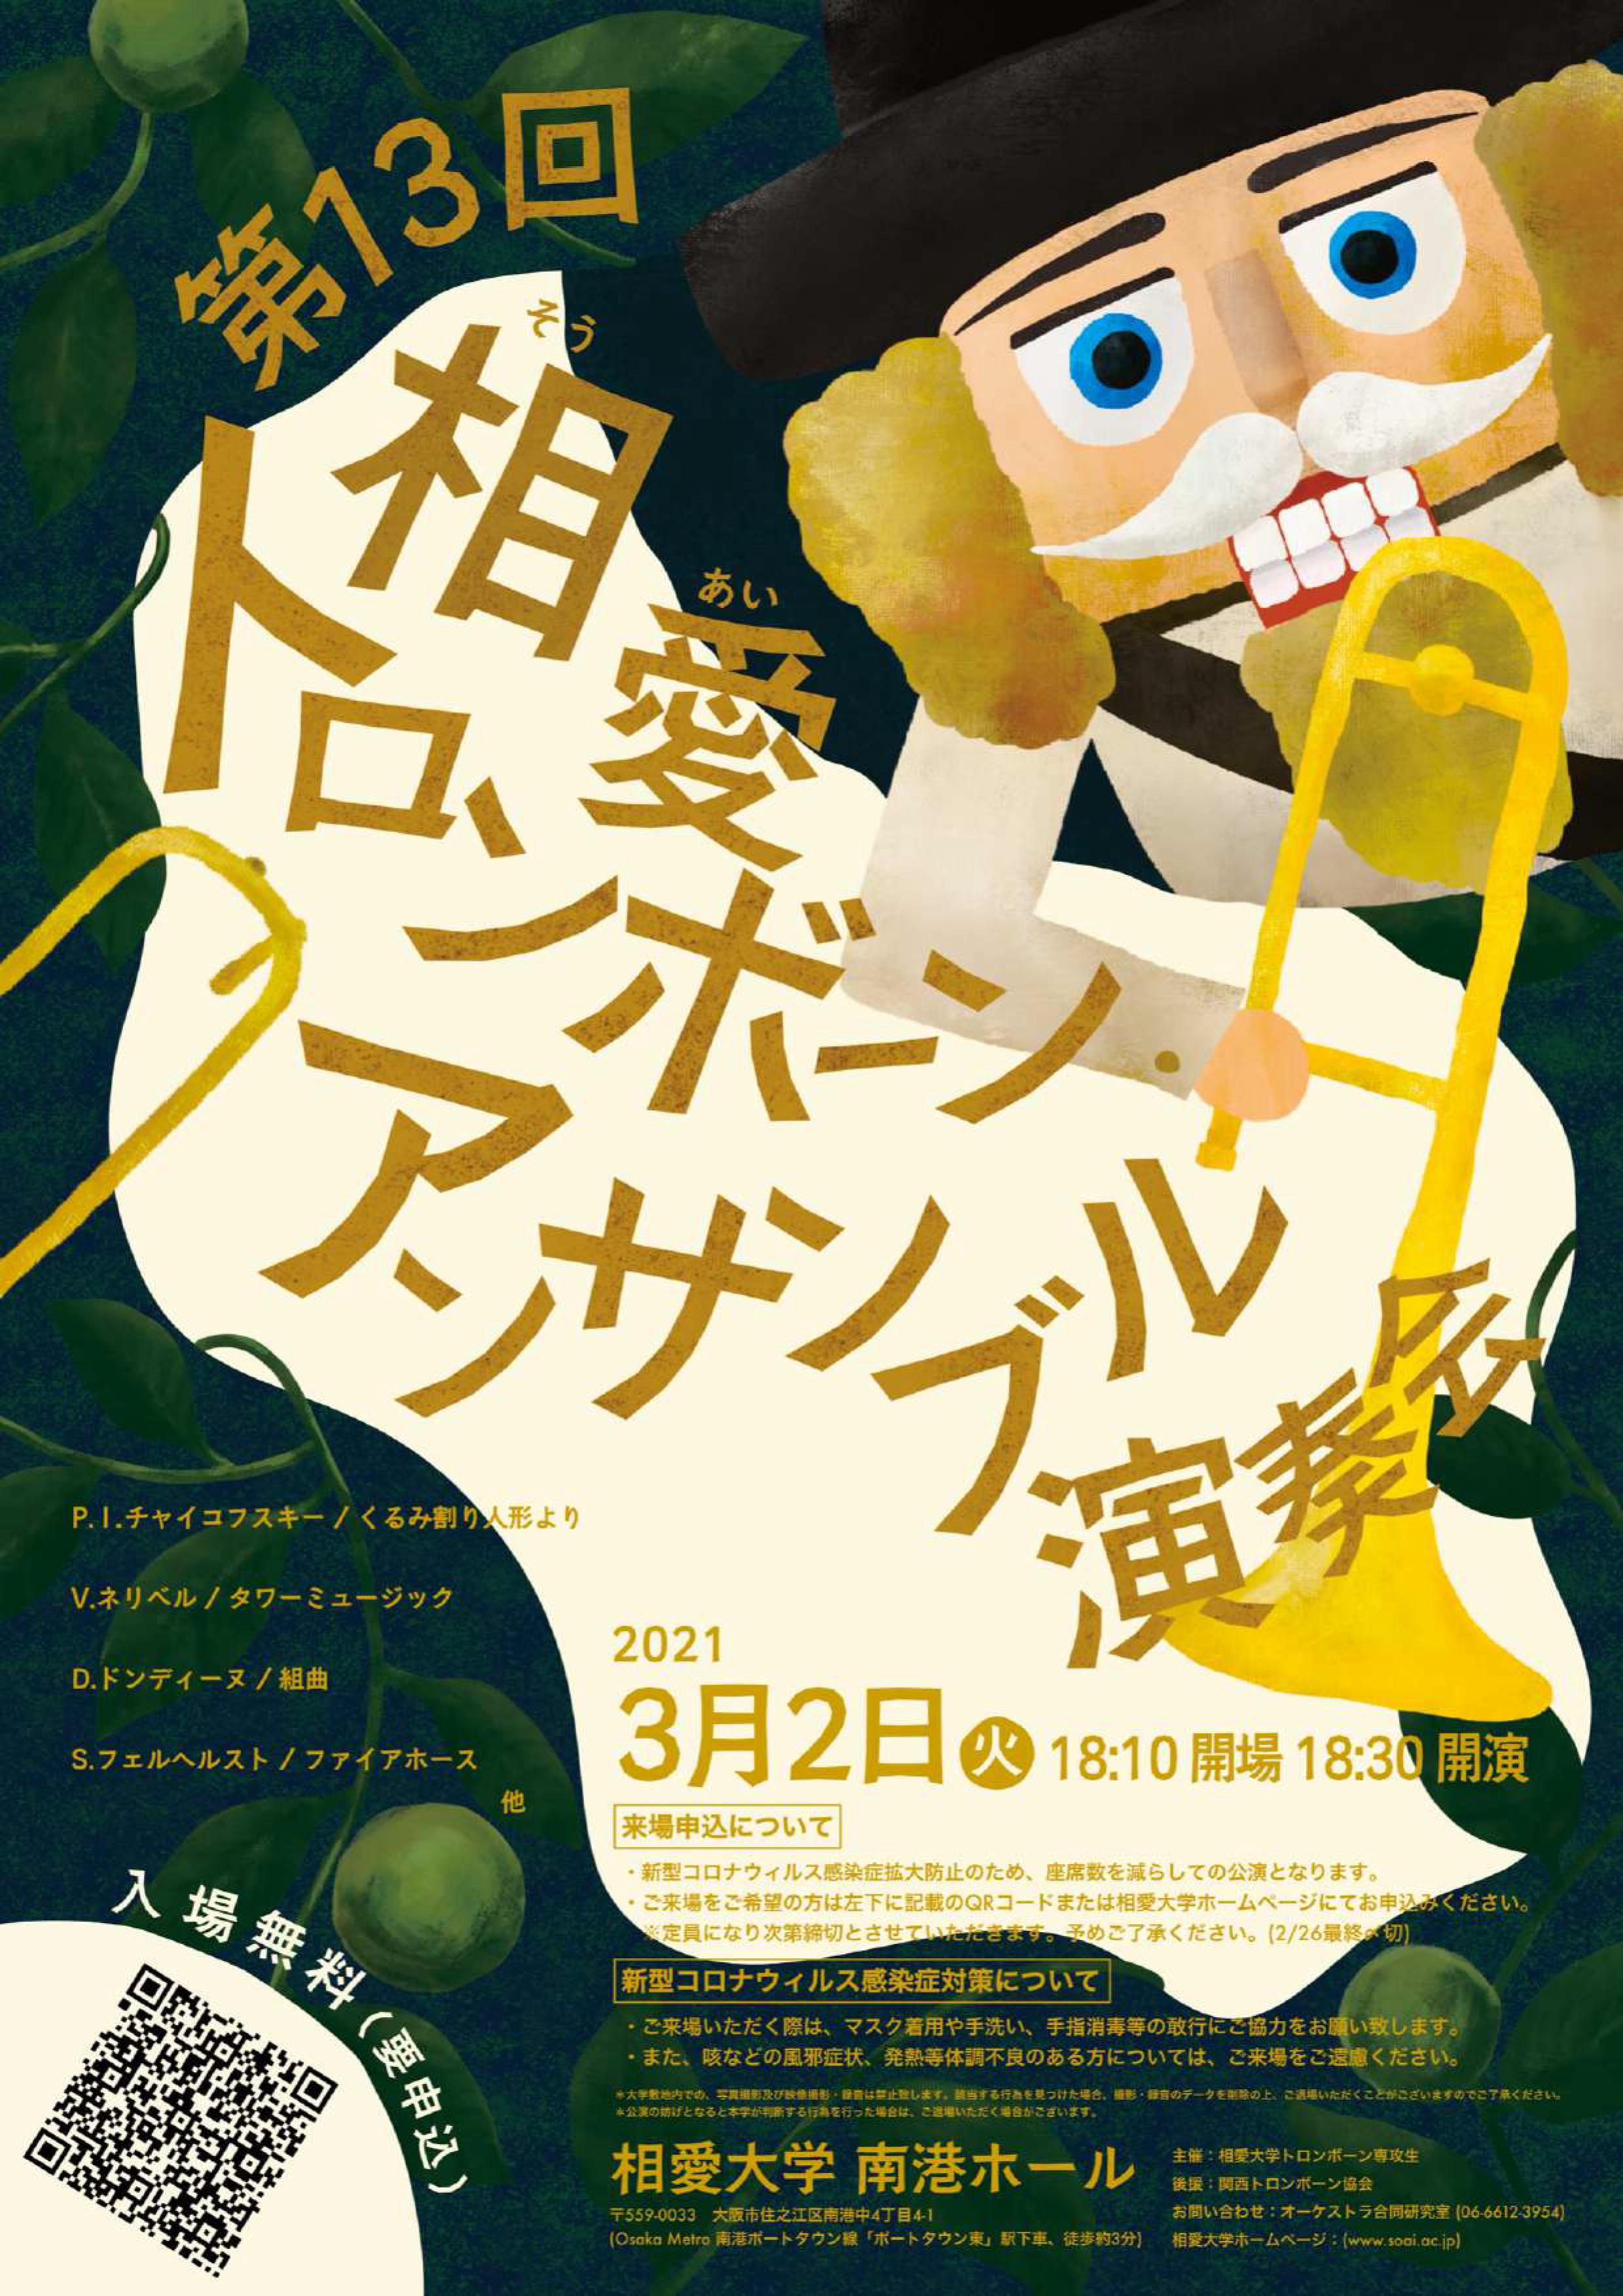 https://www.soai.ac.jp/information/event/tromboneensemble_2020.jpg